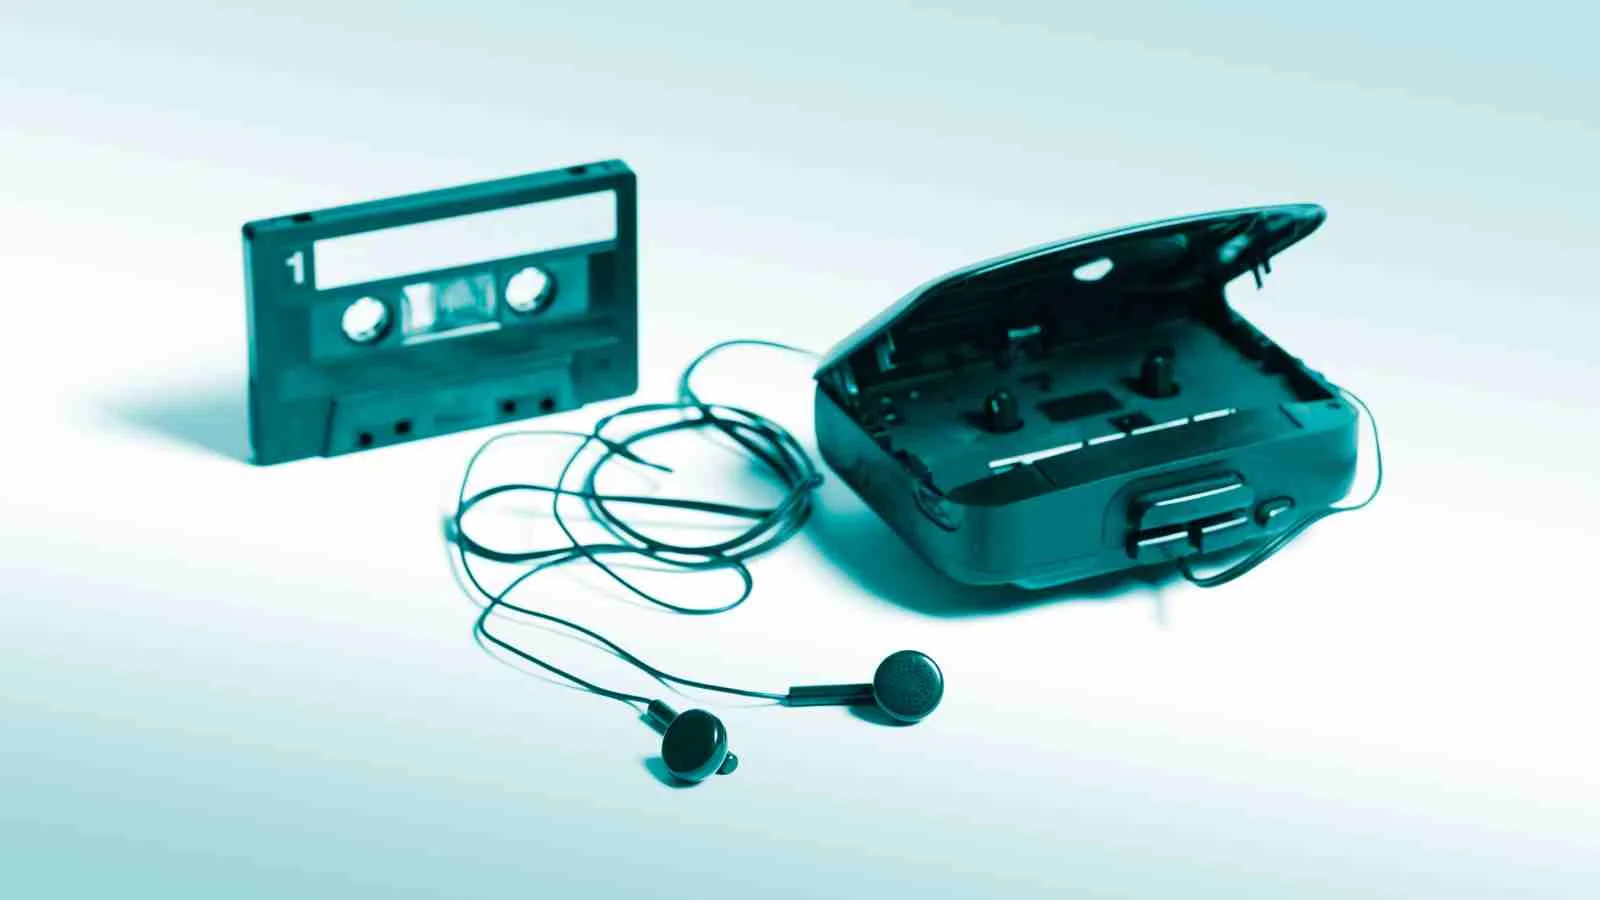 Sony Walkman from the 1980s